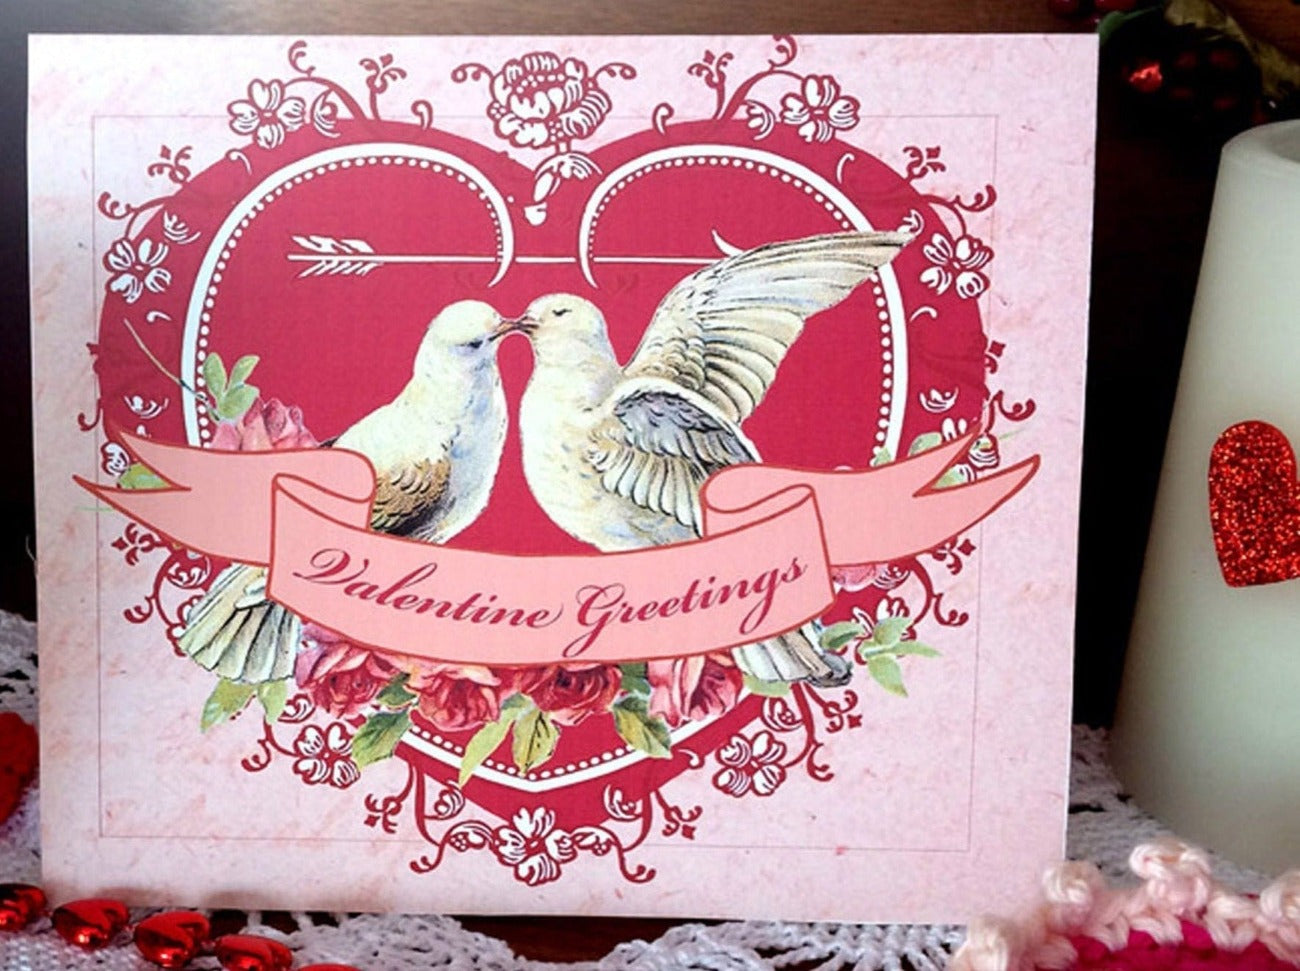 VALENTINE DOVES Greeting & Postcard Printable - Morgana Magick Spell